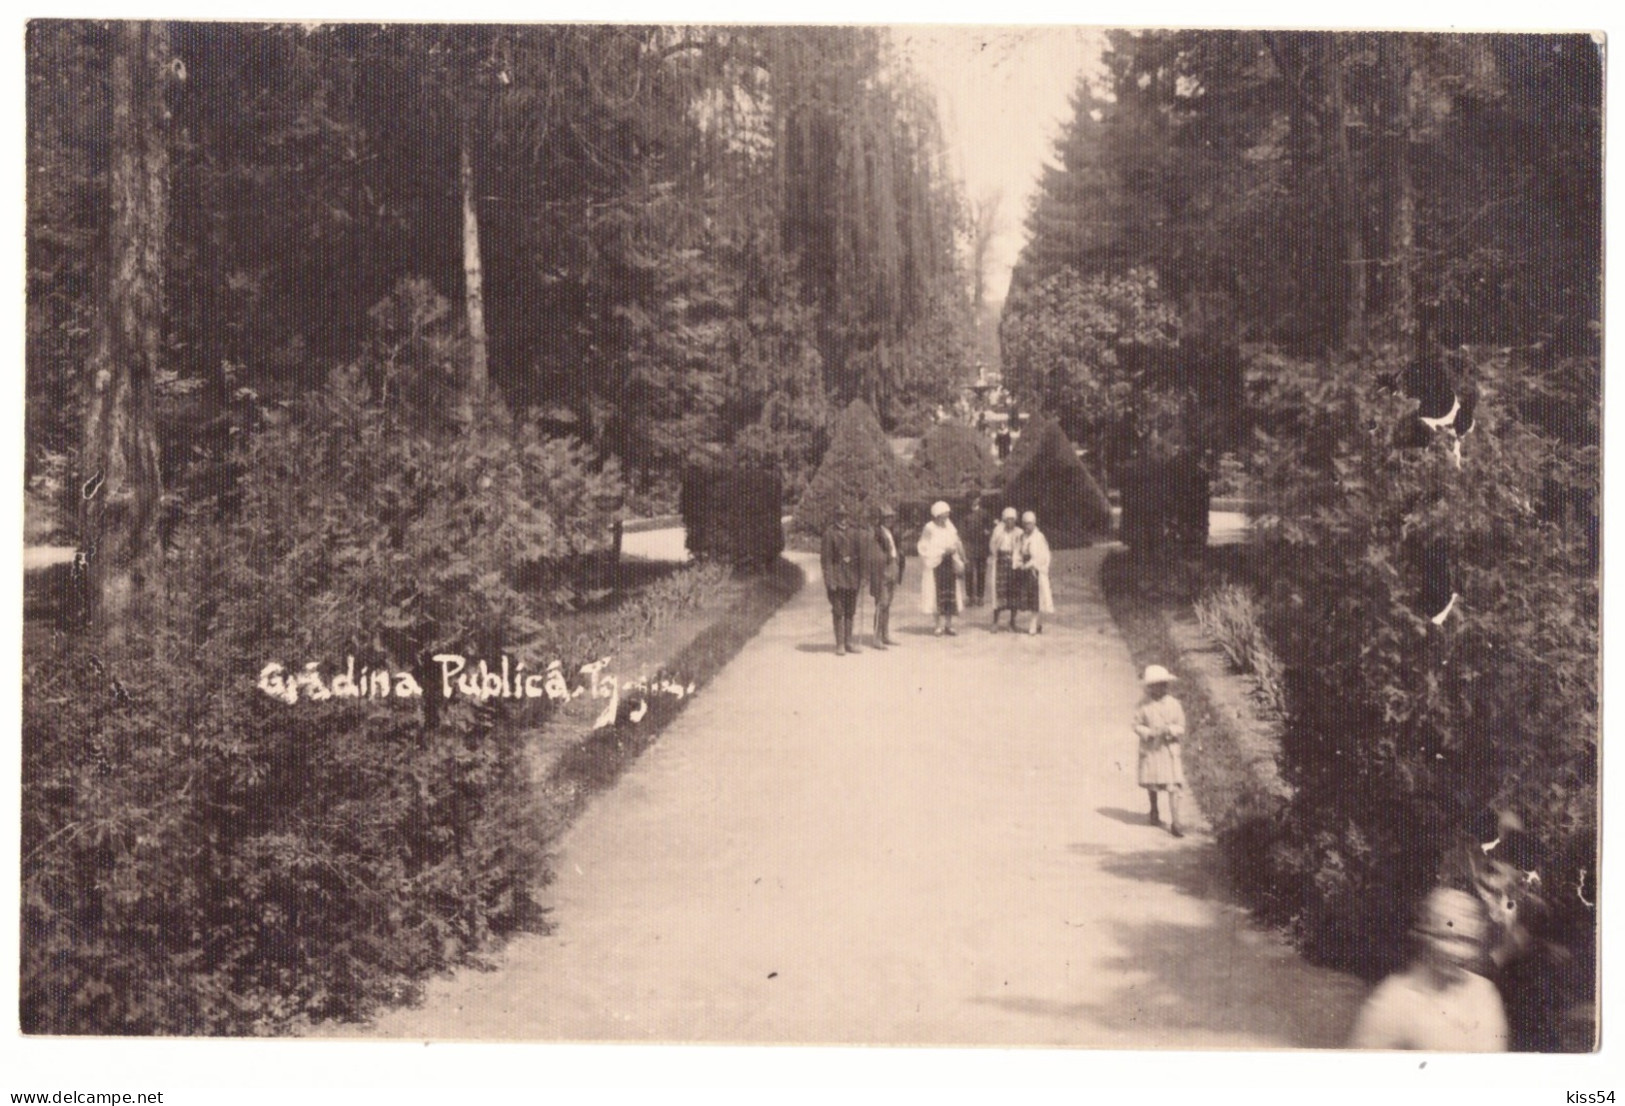 RO 38 - 18162 TARGU-JIU, Public Garden, Romania - Old Postcard, Real PHOTO - Unused - Romania